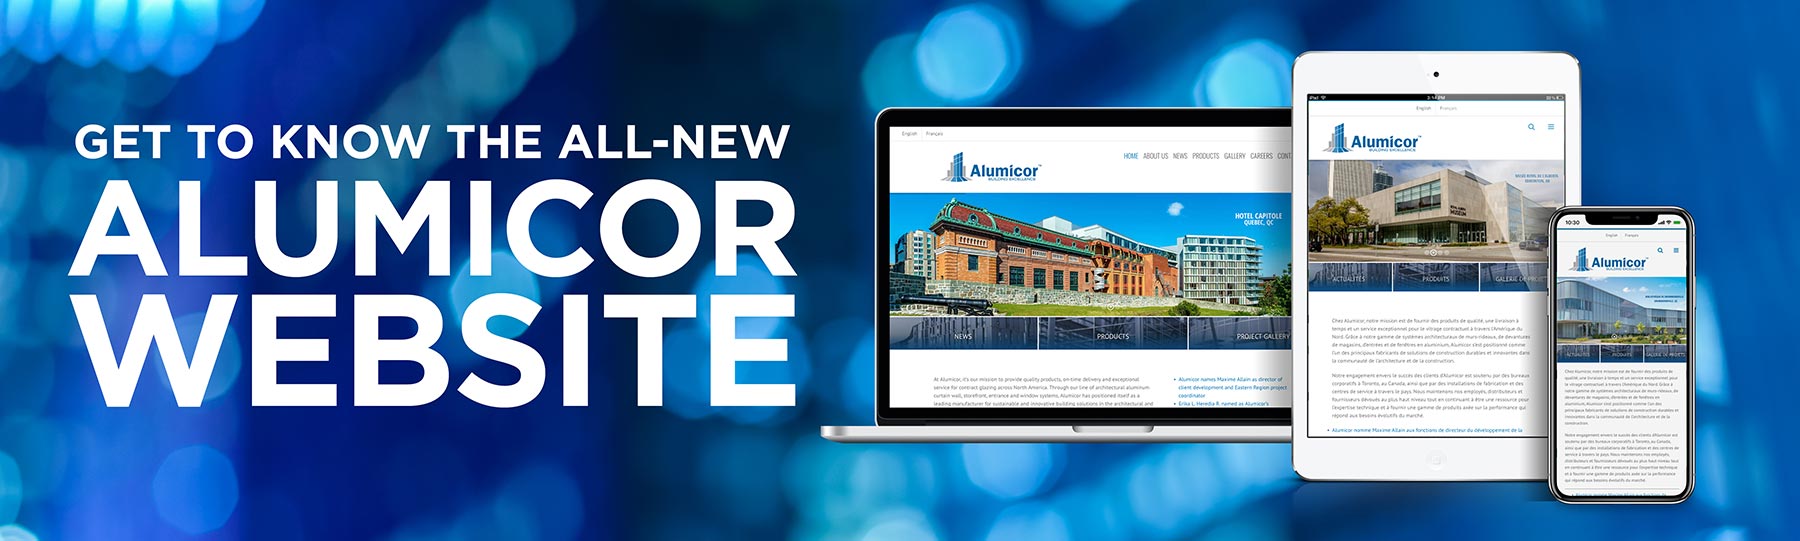 Alumicor Website Banner